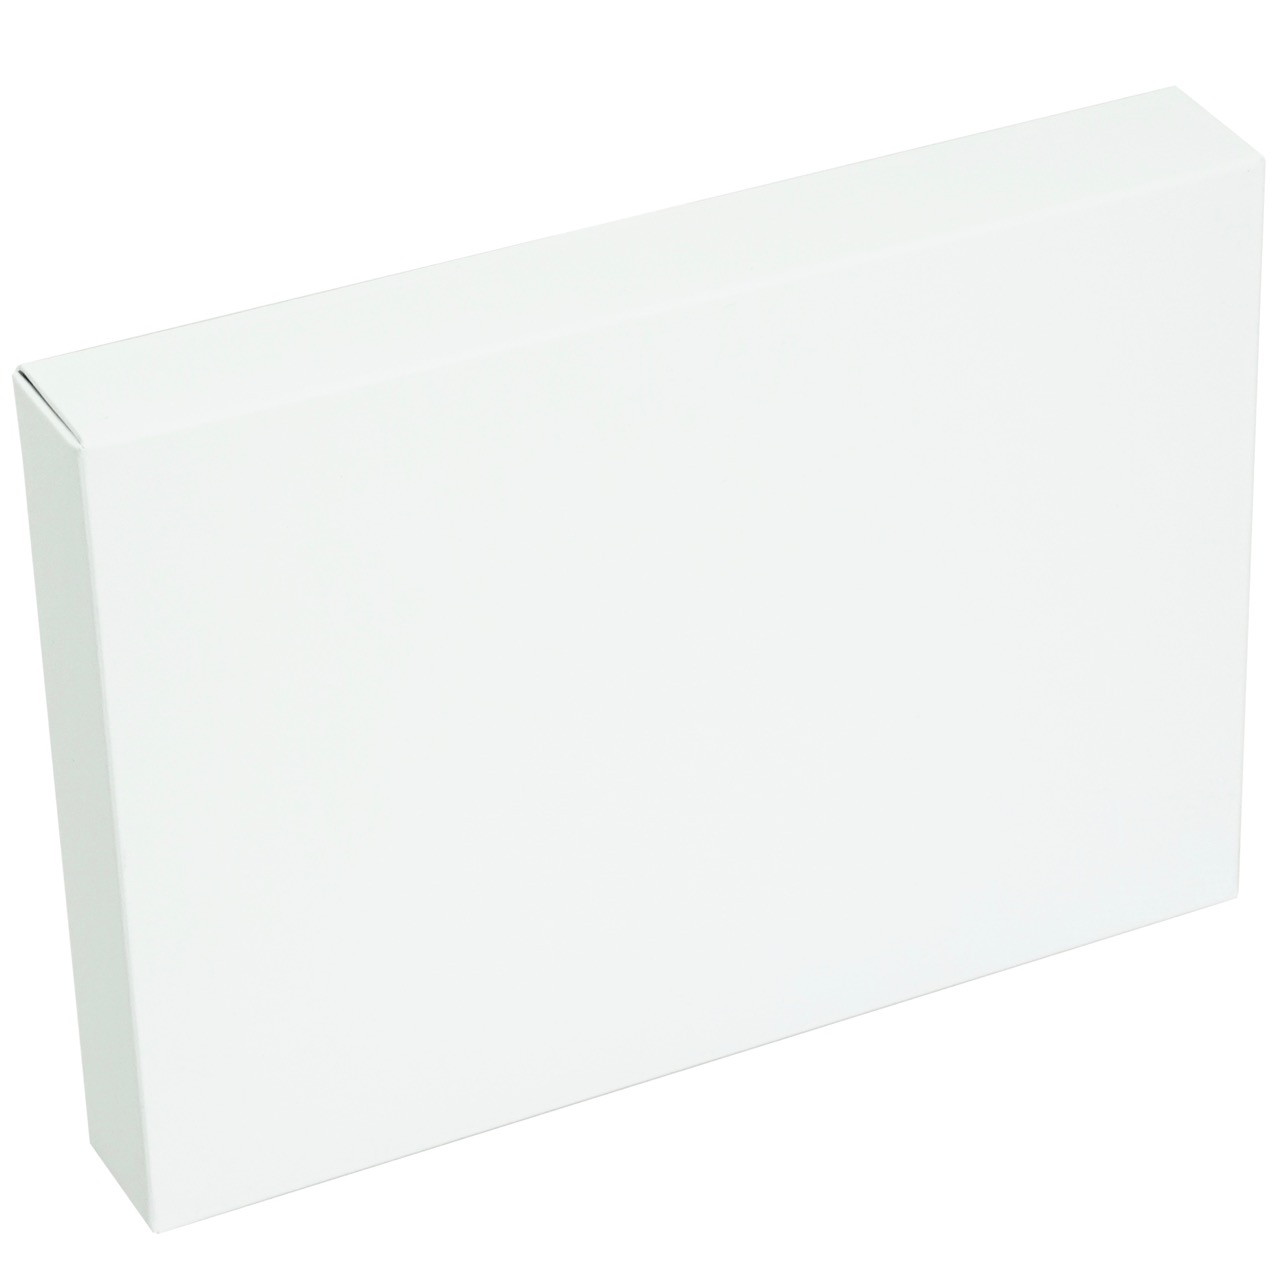 Buntbox Frame M toile en carton  (21 cm x 14.8 cm)